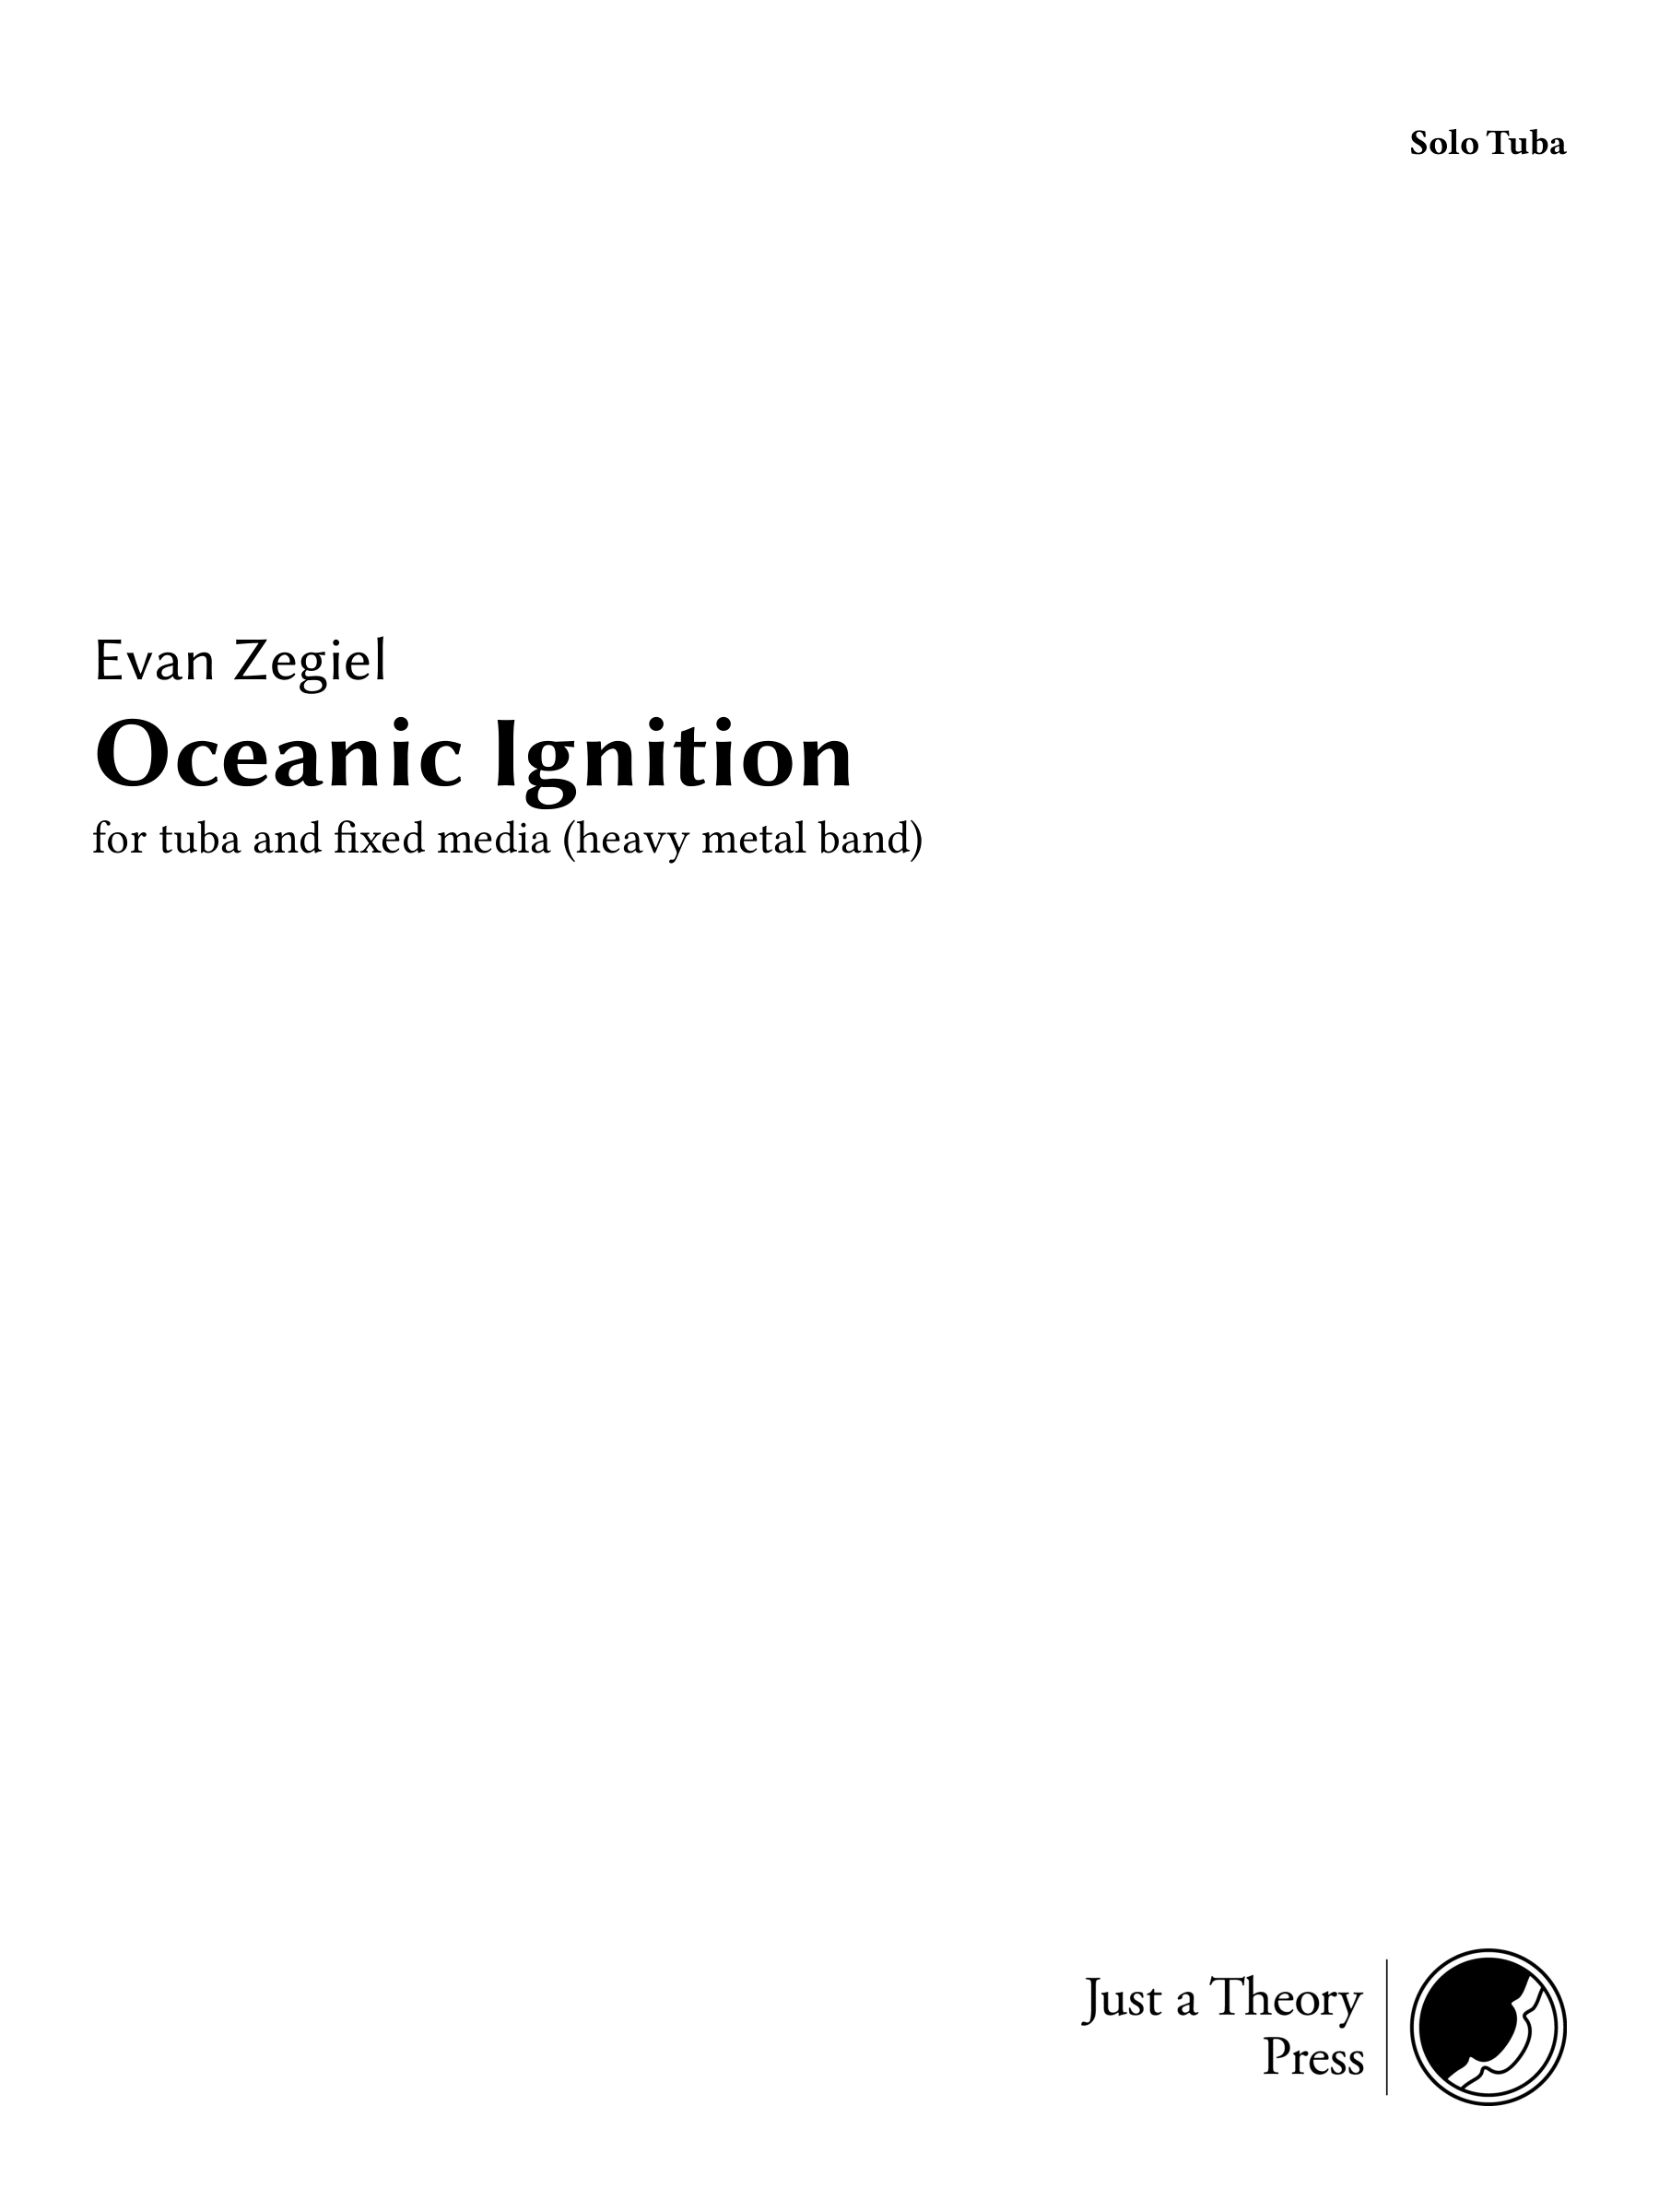 Oceanic Ignition